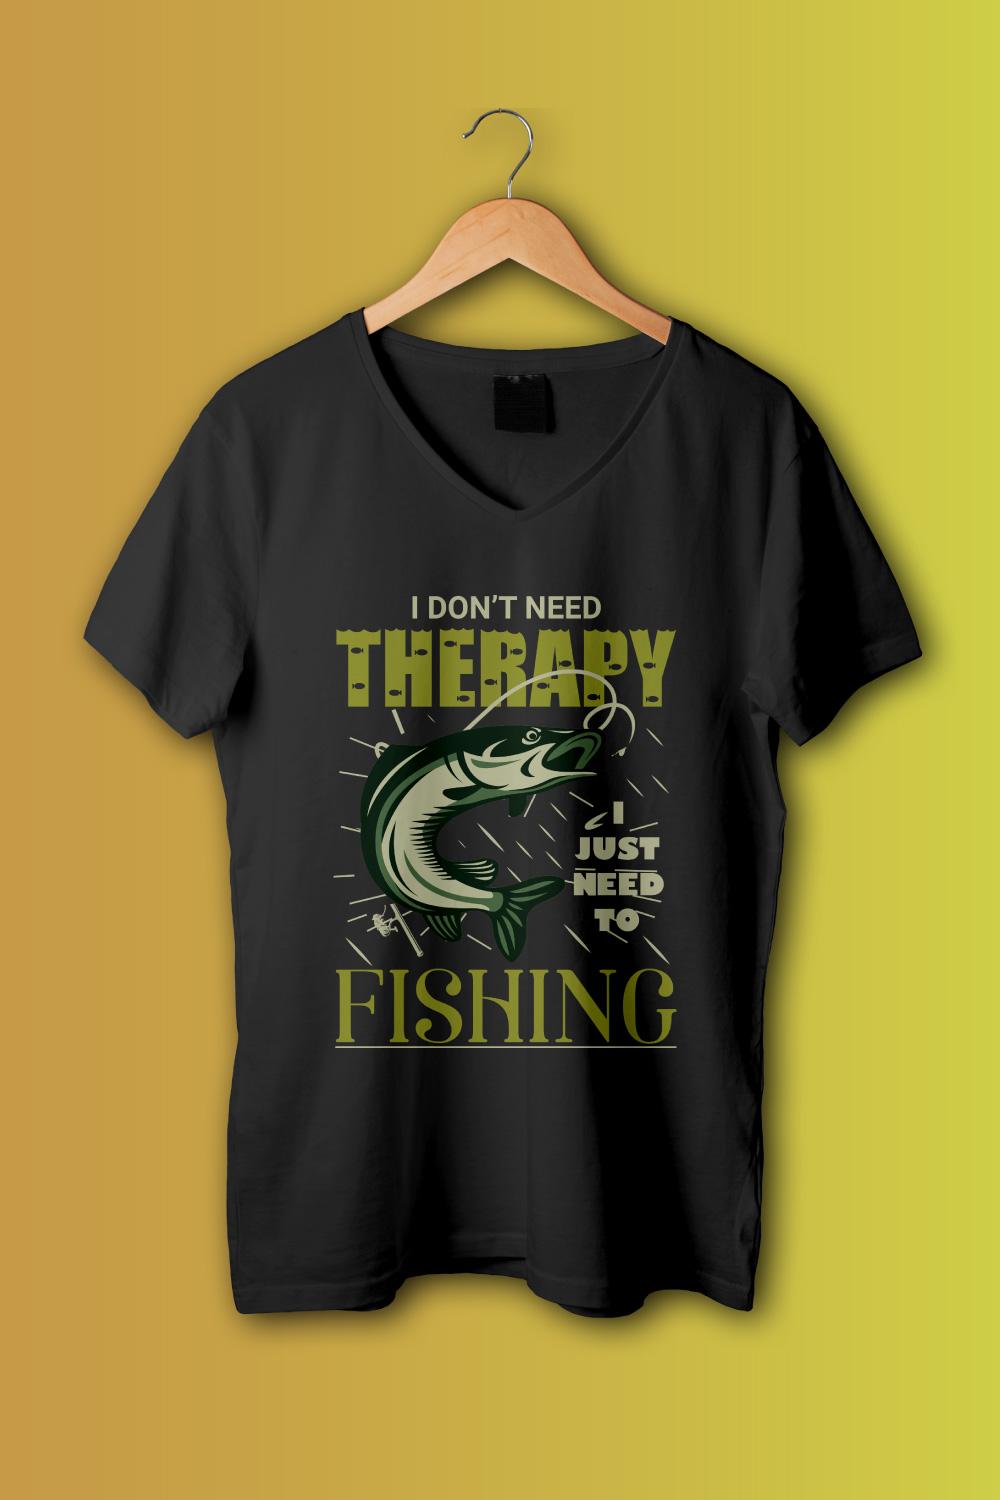 Fishing t-shirt design pinterest preview image.